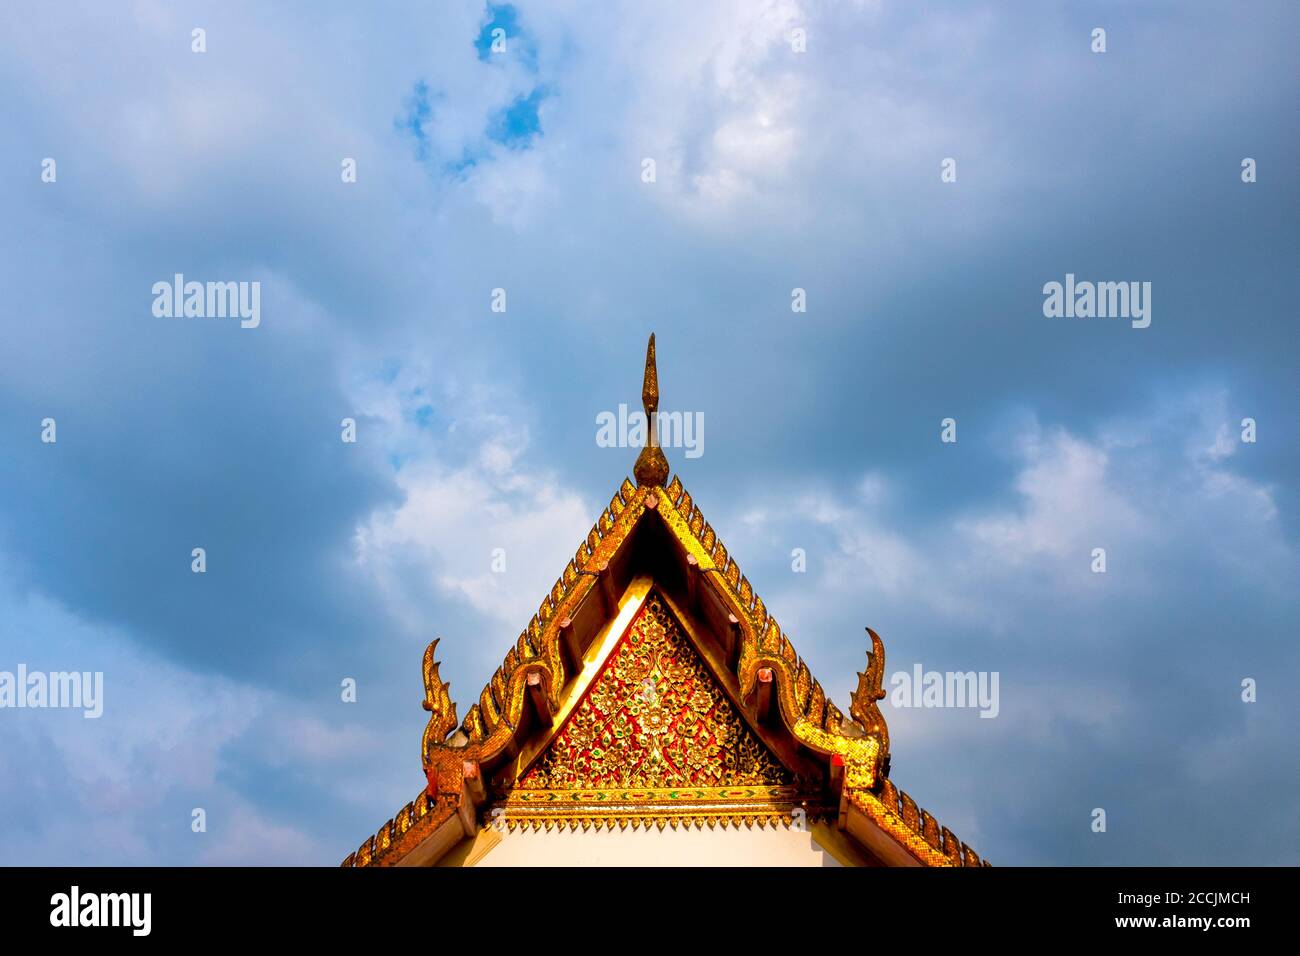 Tiled Tympanum of a buddhist temple, Bangkok, Thailand Stock Photo